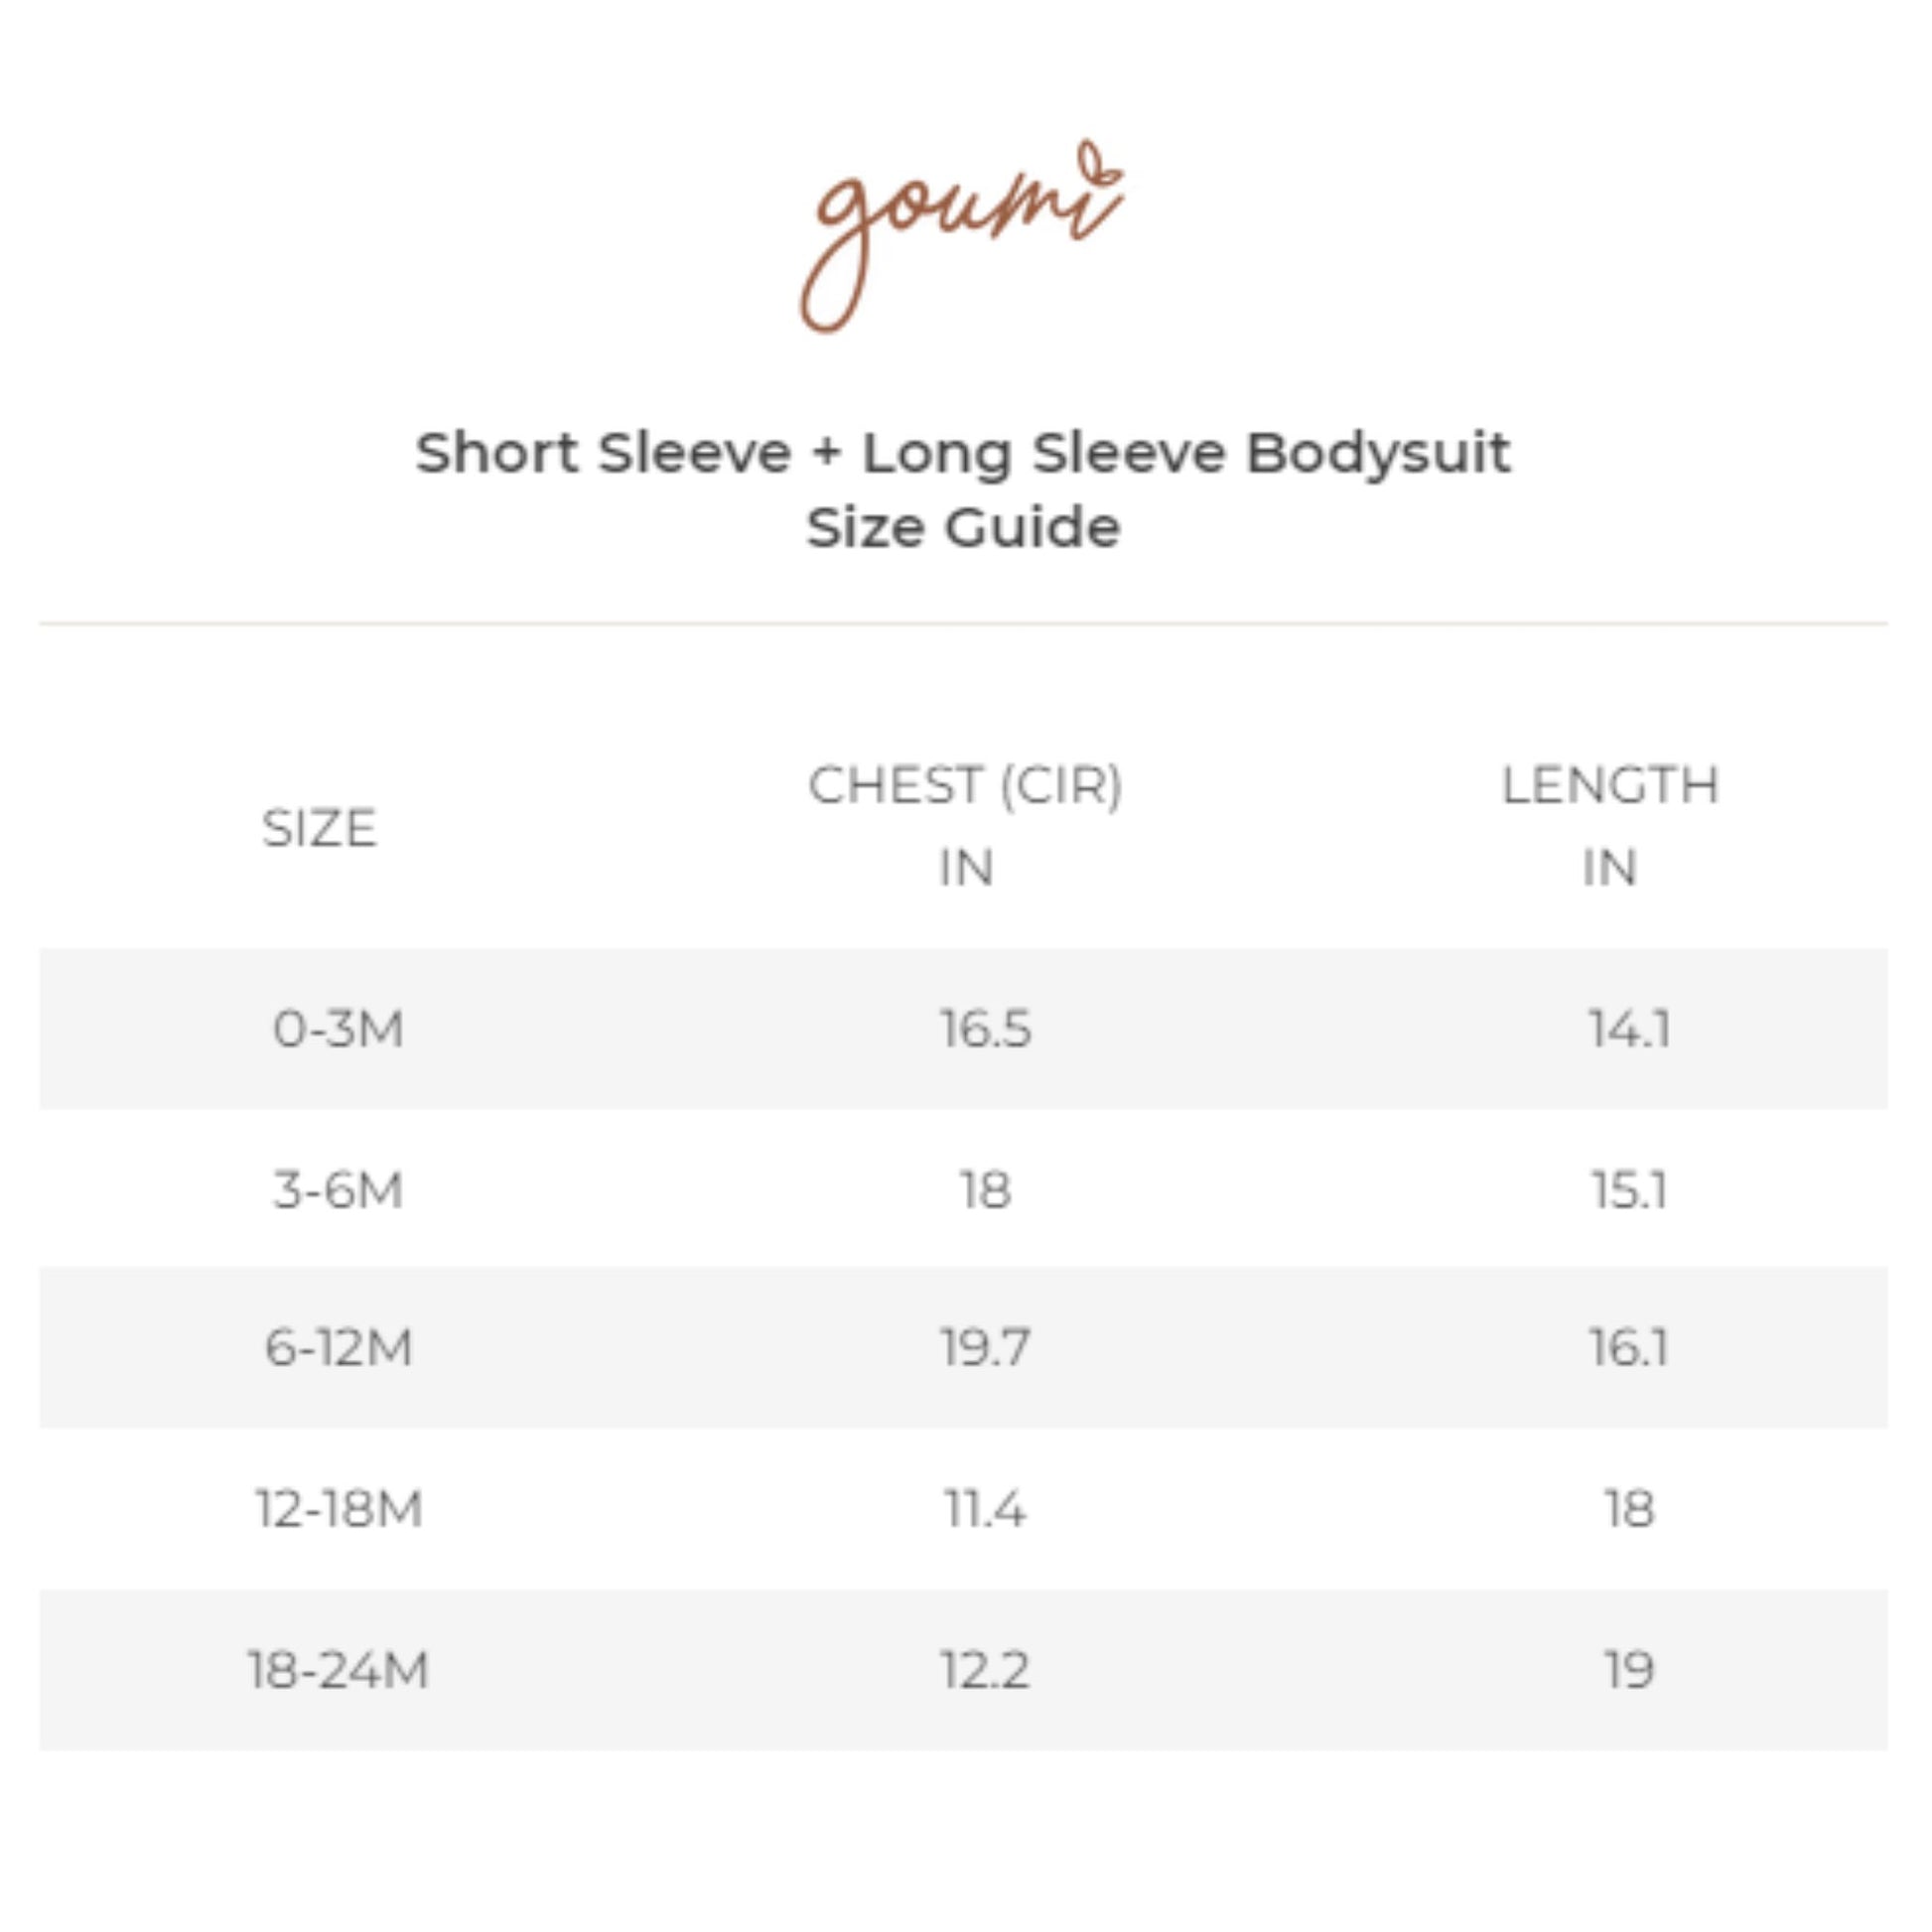 goumikids Long Sleeve Bodysuit - Trail Mix size guide